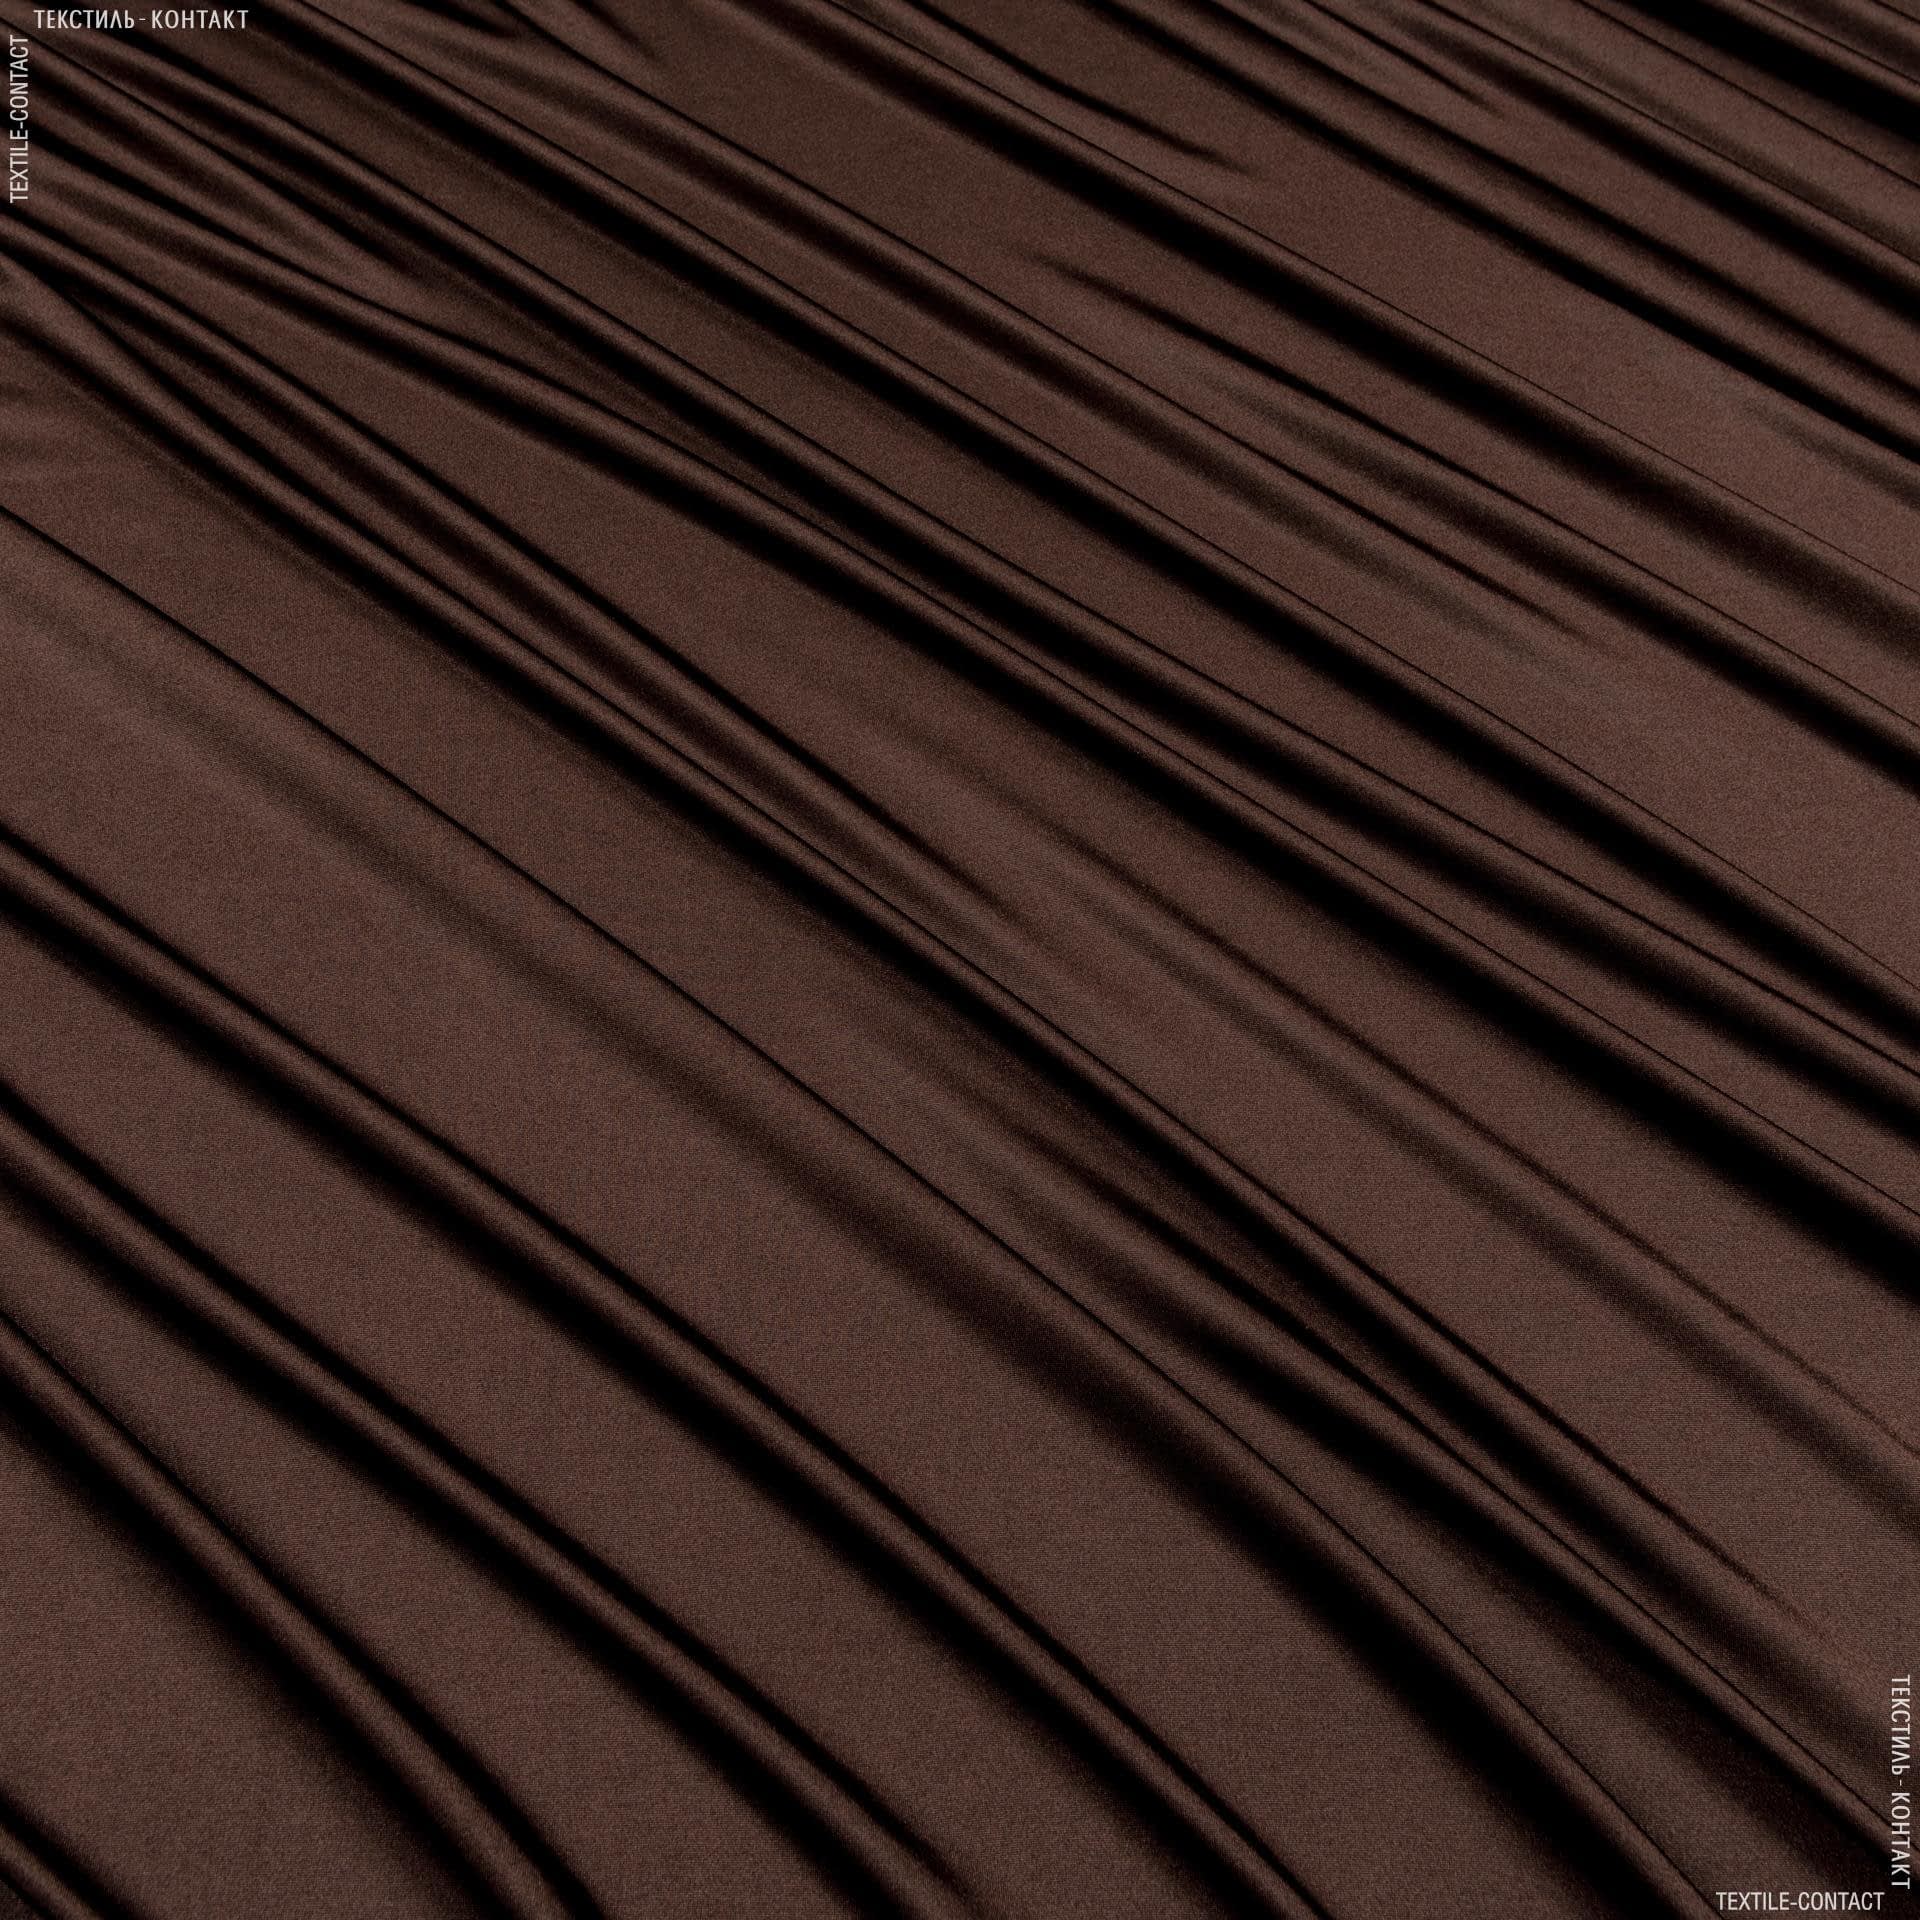 Ткани для платьев - Трикотаж жасмин коричневый